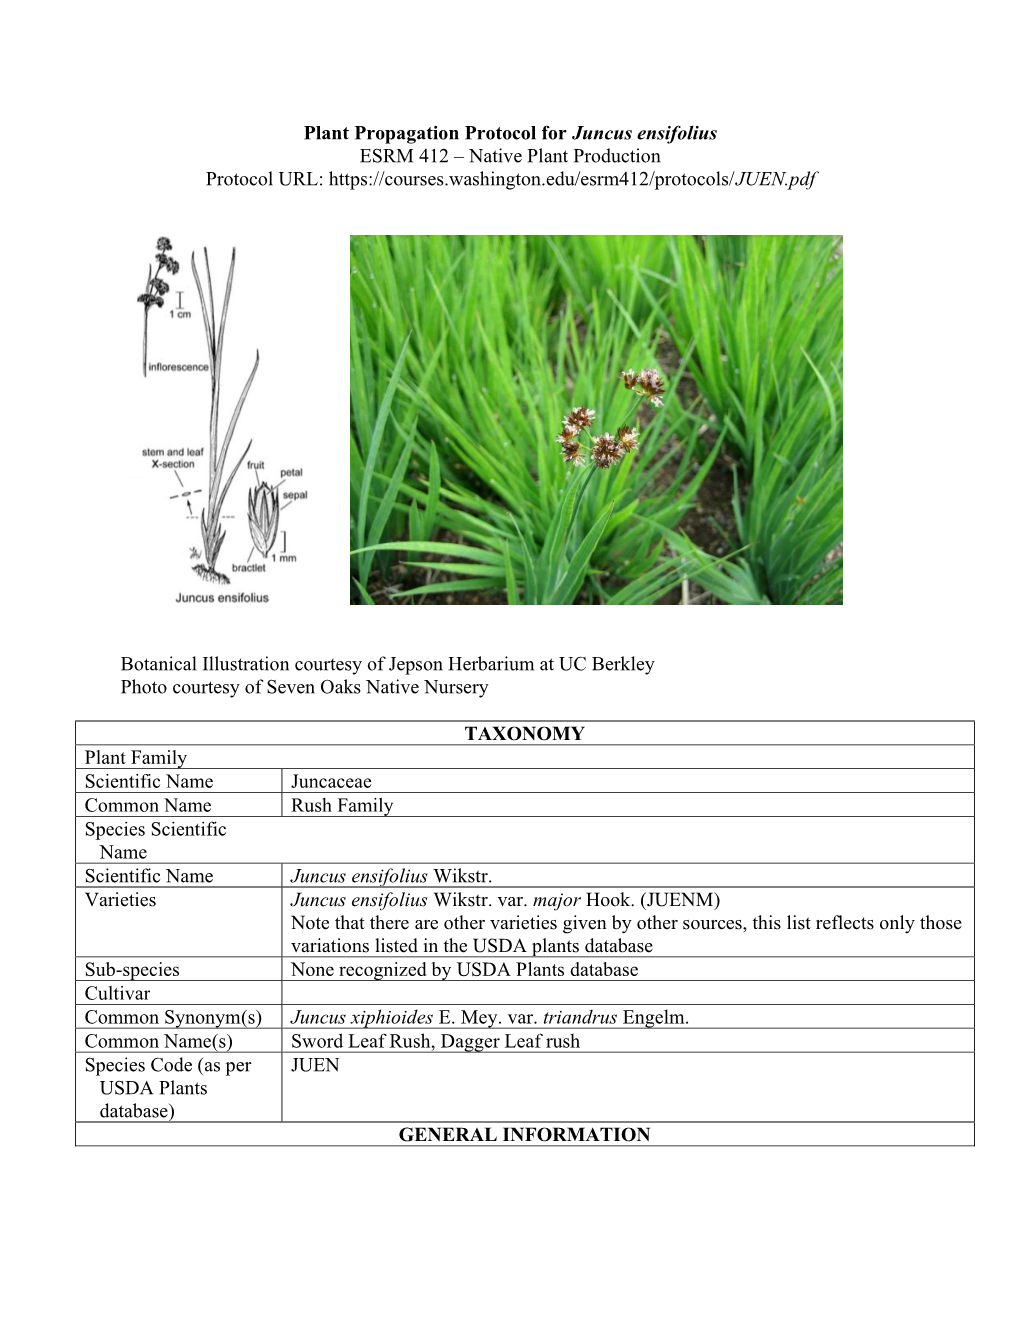 Plant Propagation Protocol for Juncus Ensifolius ESRM 412 – Native Plant Production Protocol URL